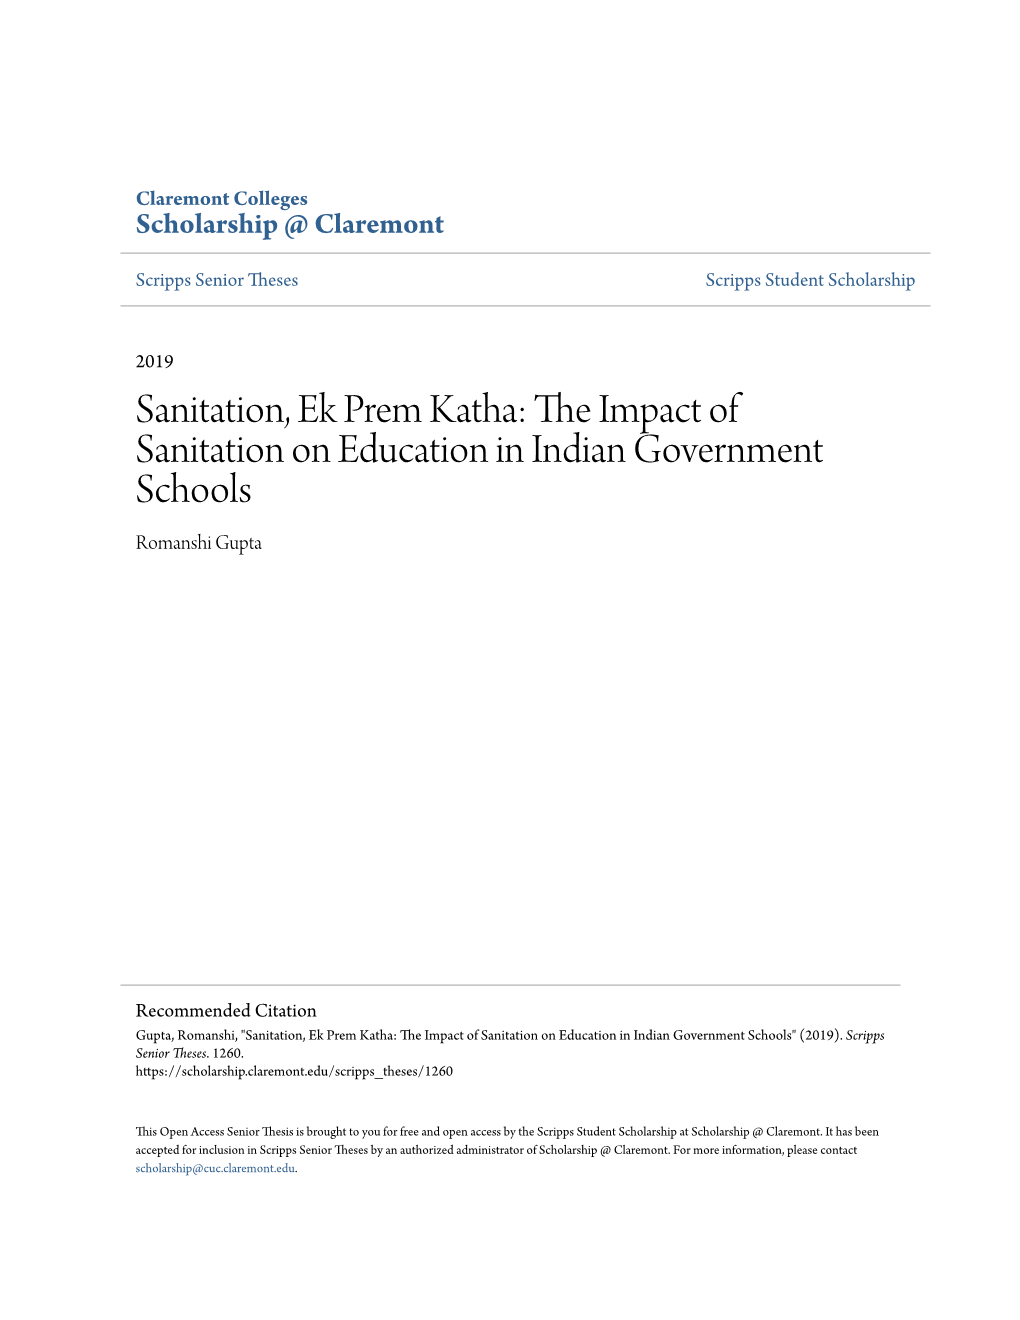 Sanitation, Ek Prem Katha: the Mpi Act of Sanitation on Education in Indian Government Schools Romanshi Gupta